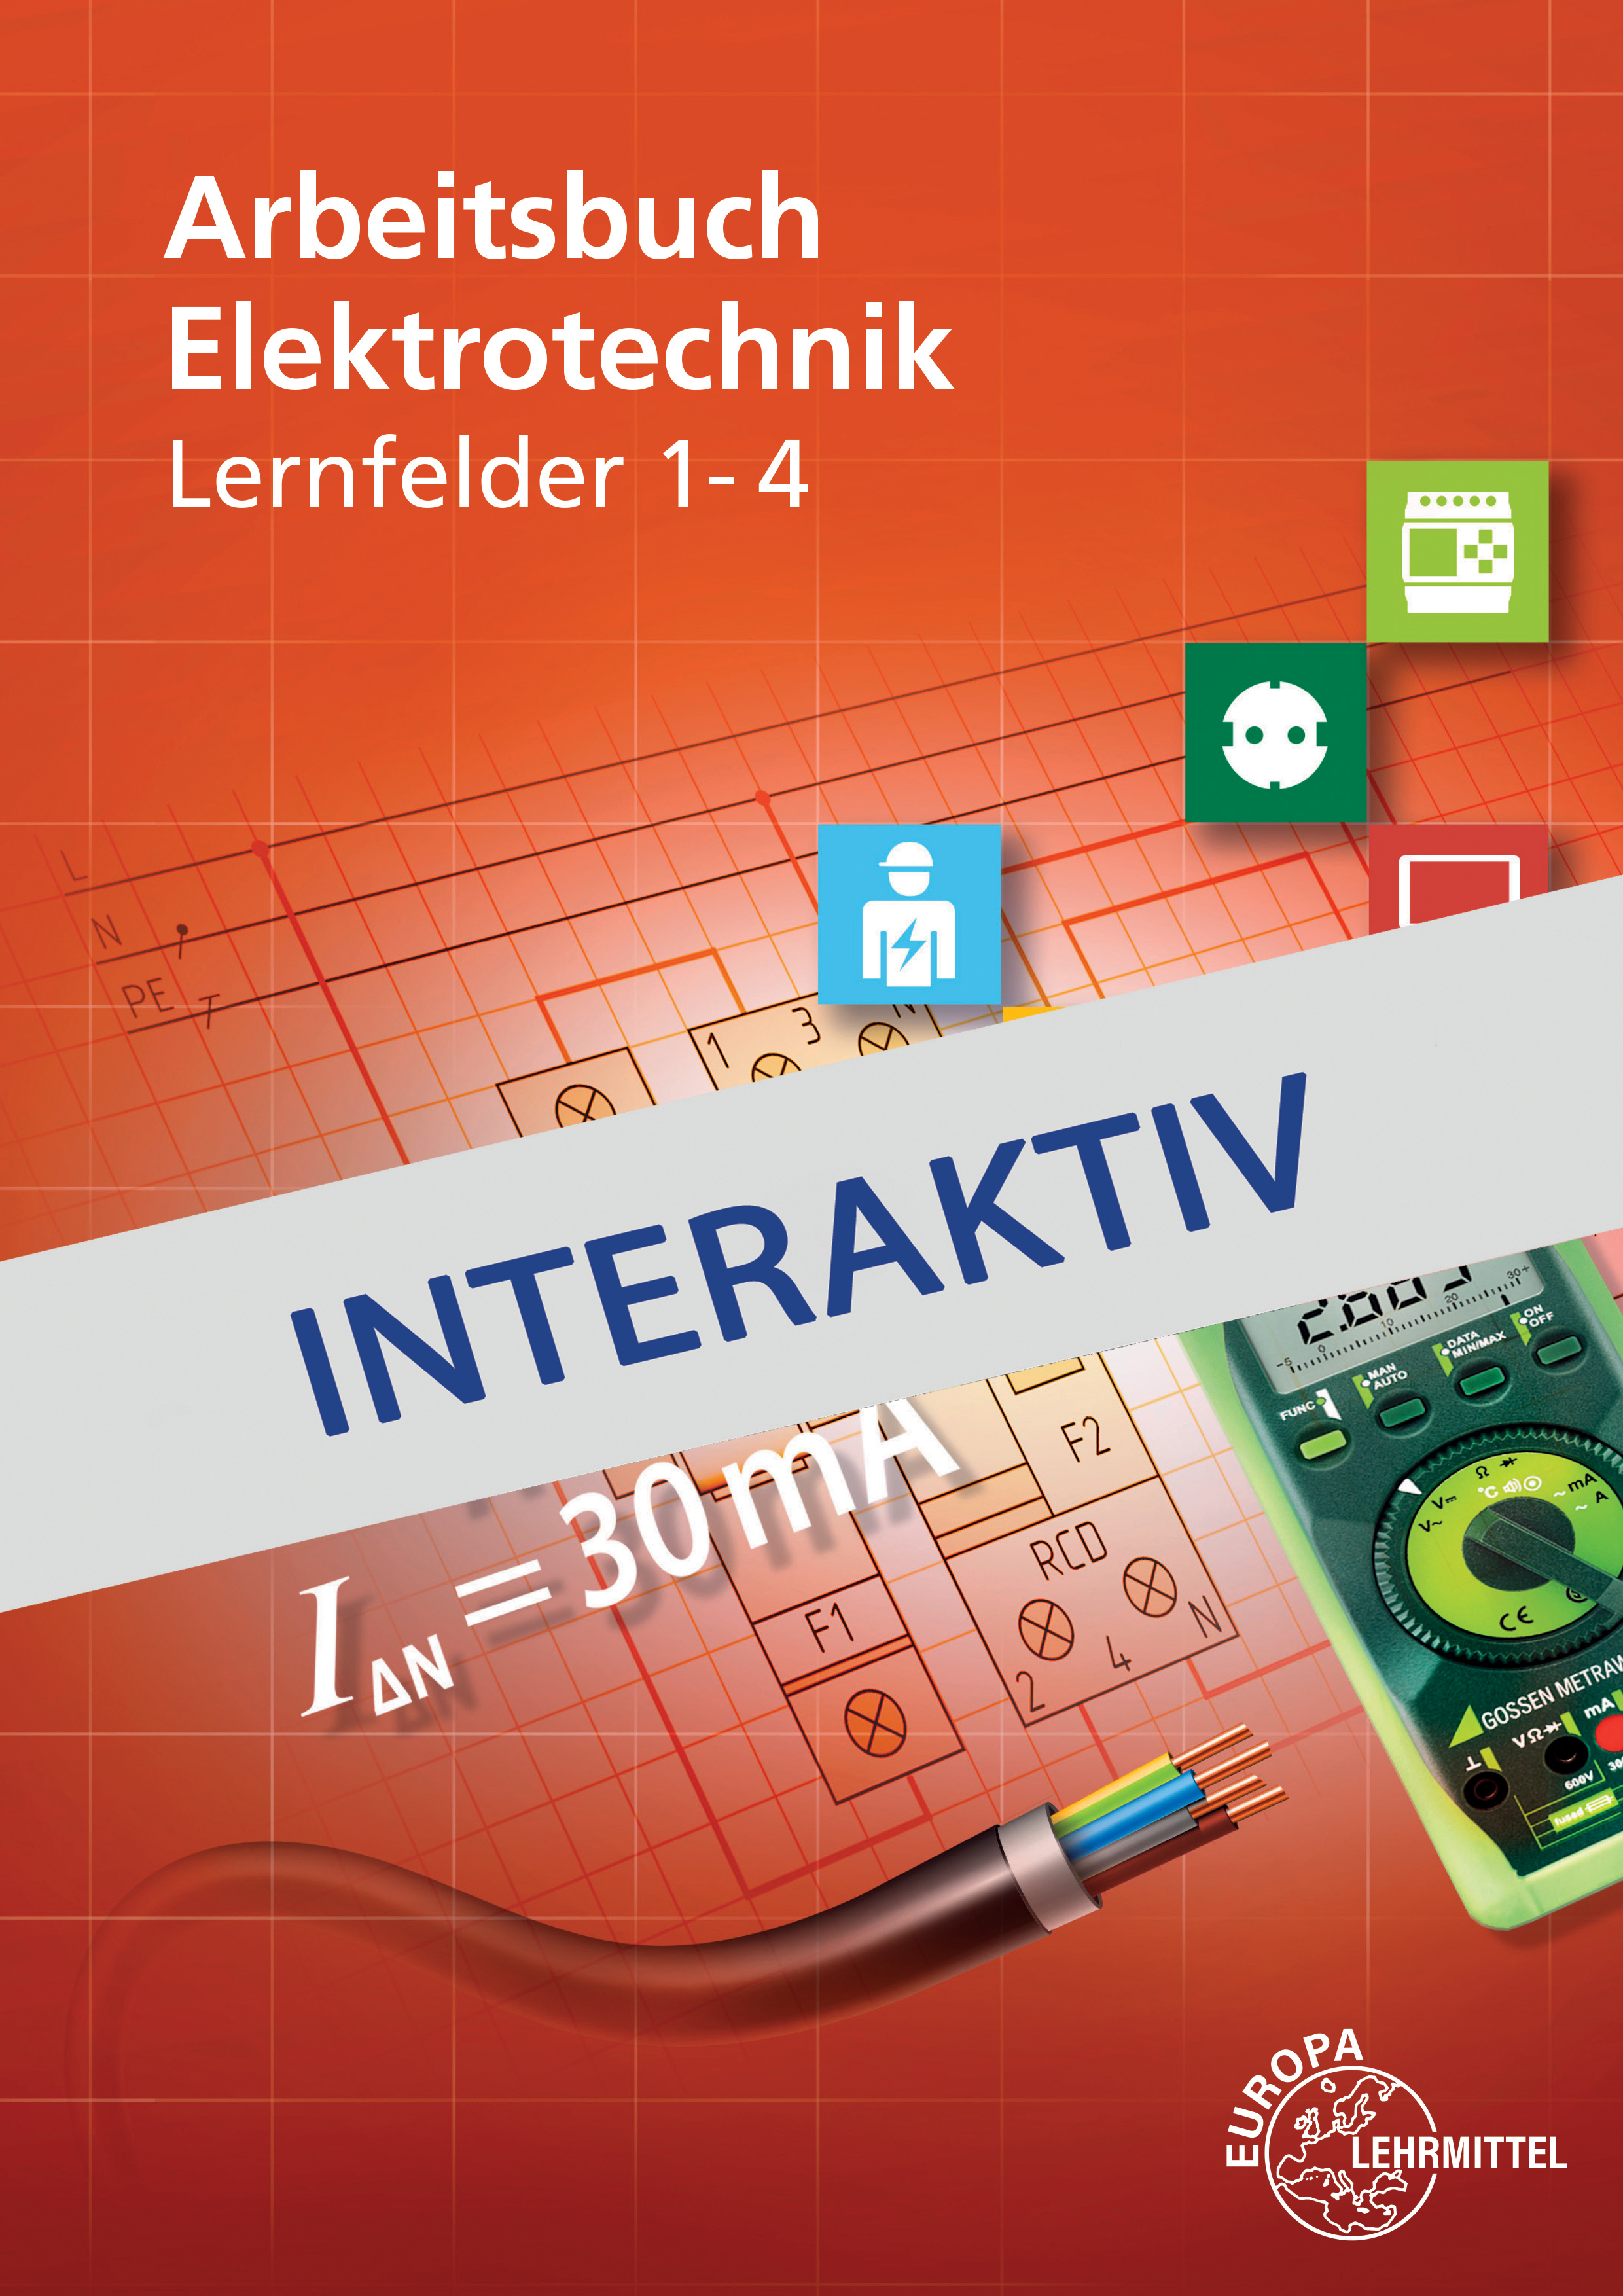 Arbeitsbuch Elektrotechnik LF 1-4 interaktiv 5.0 digital